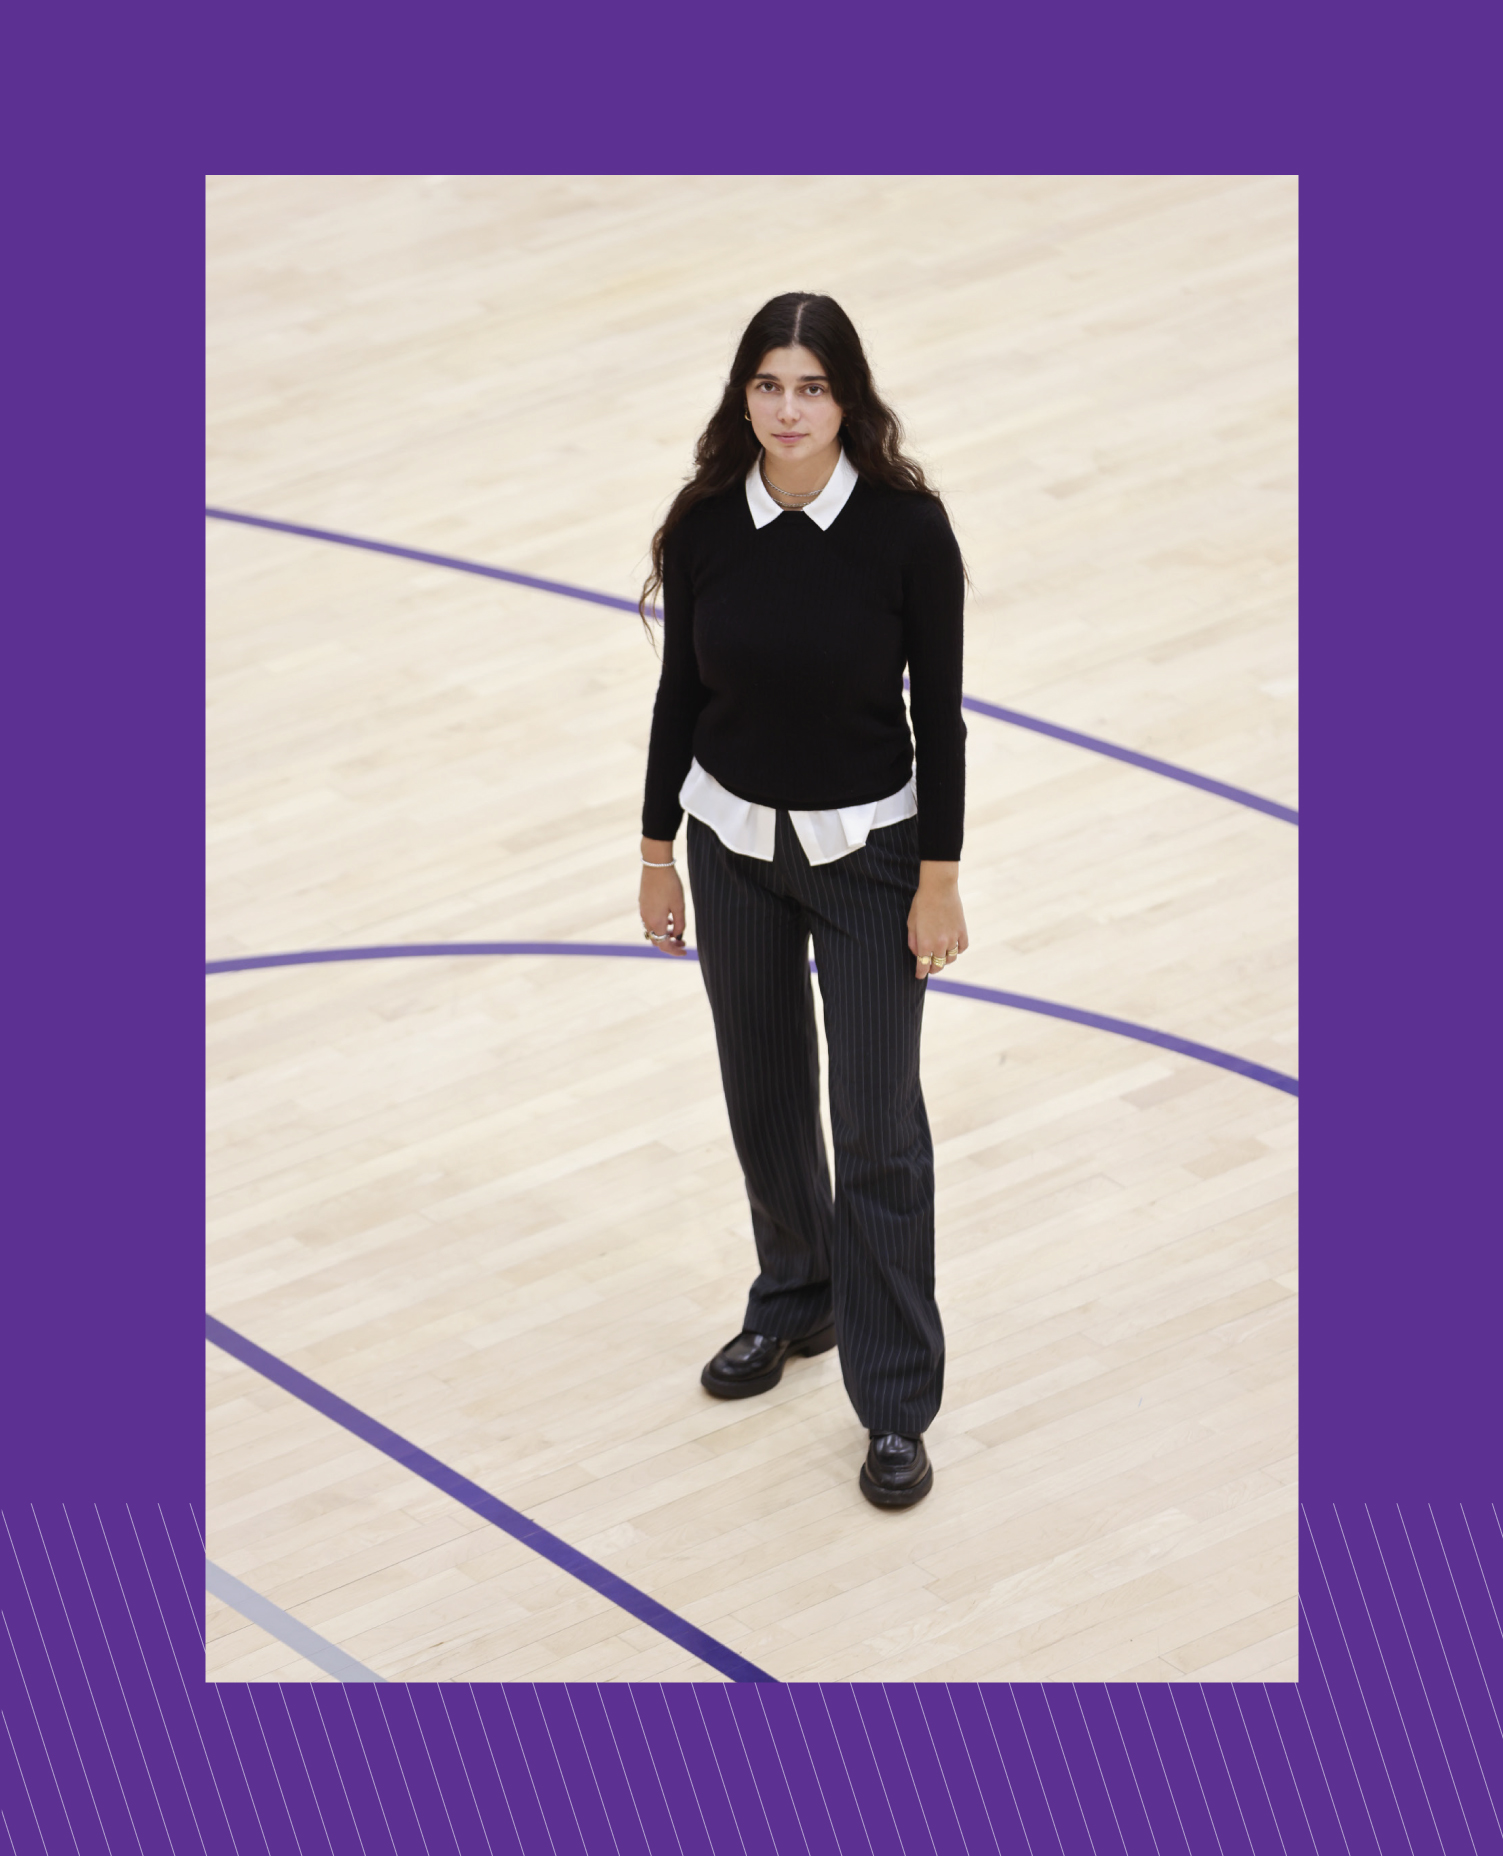 Bella Carino standing near the center of a basketball court.